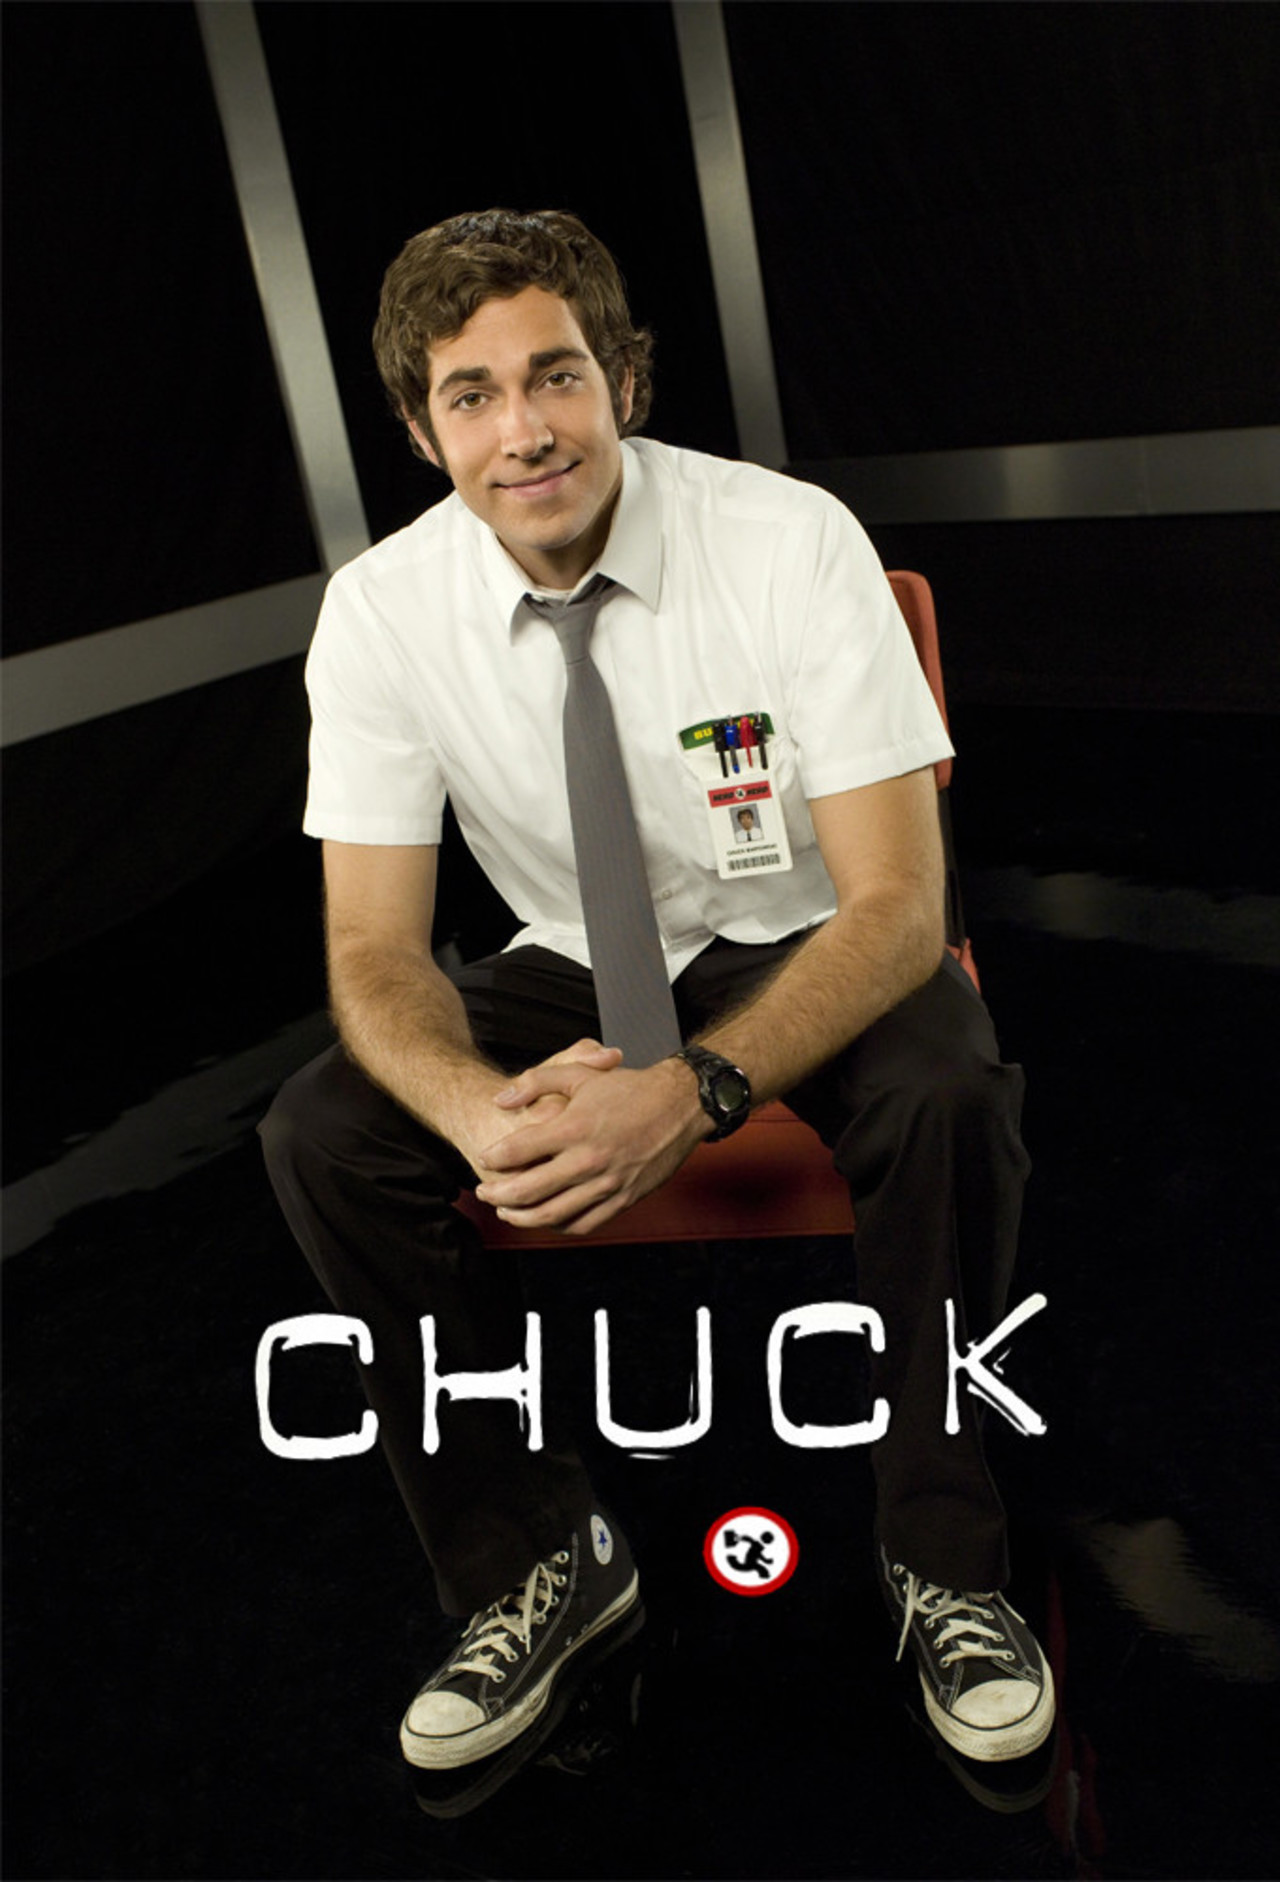 chuck season 4 download episodes free